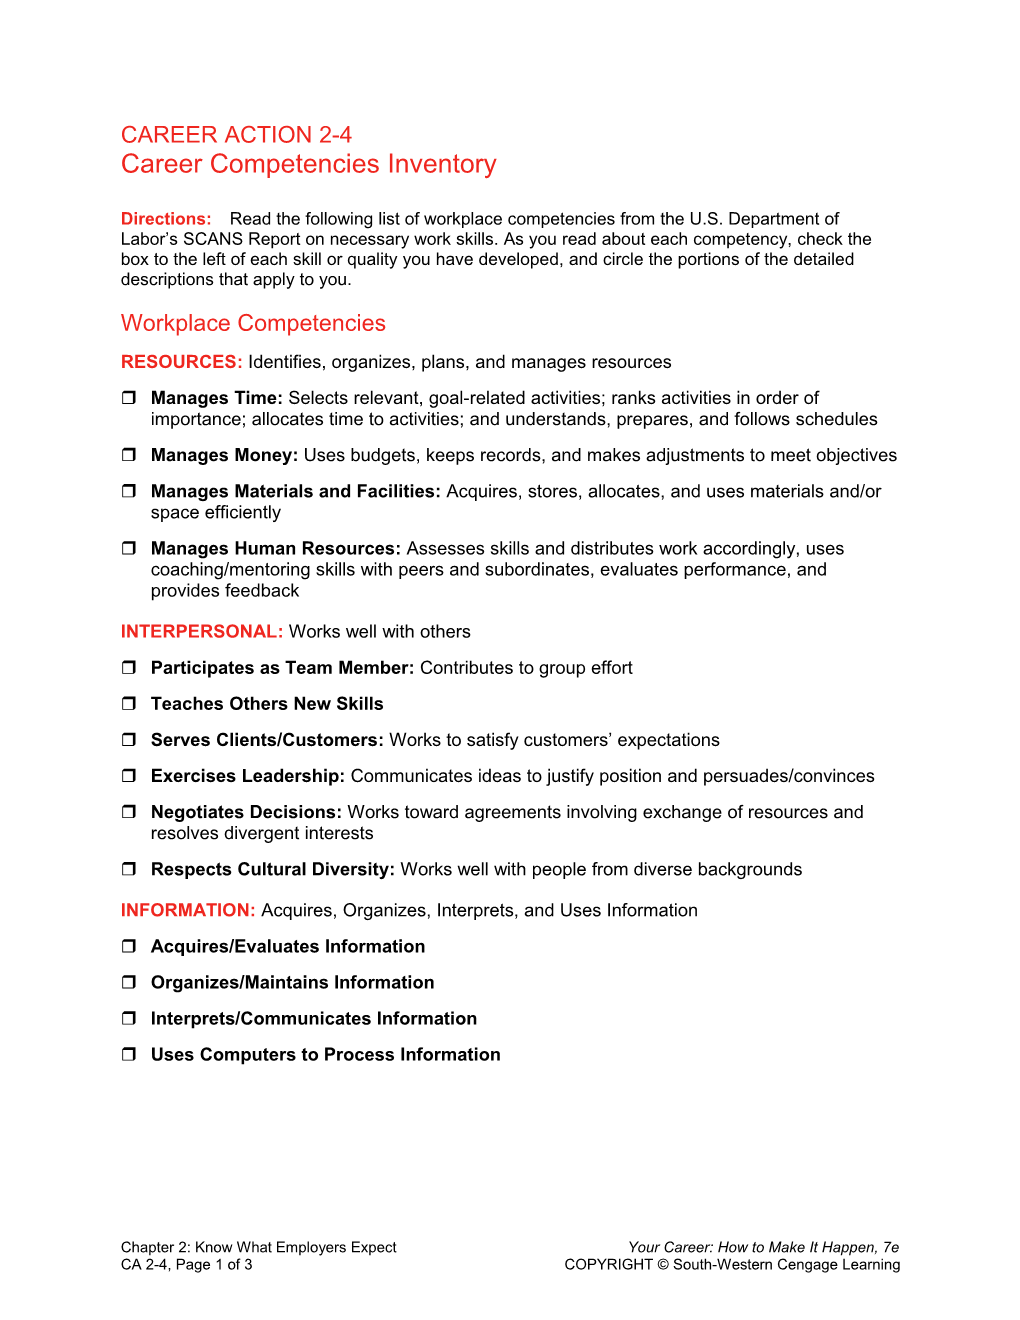 Career Competencies Inventory